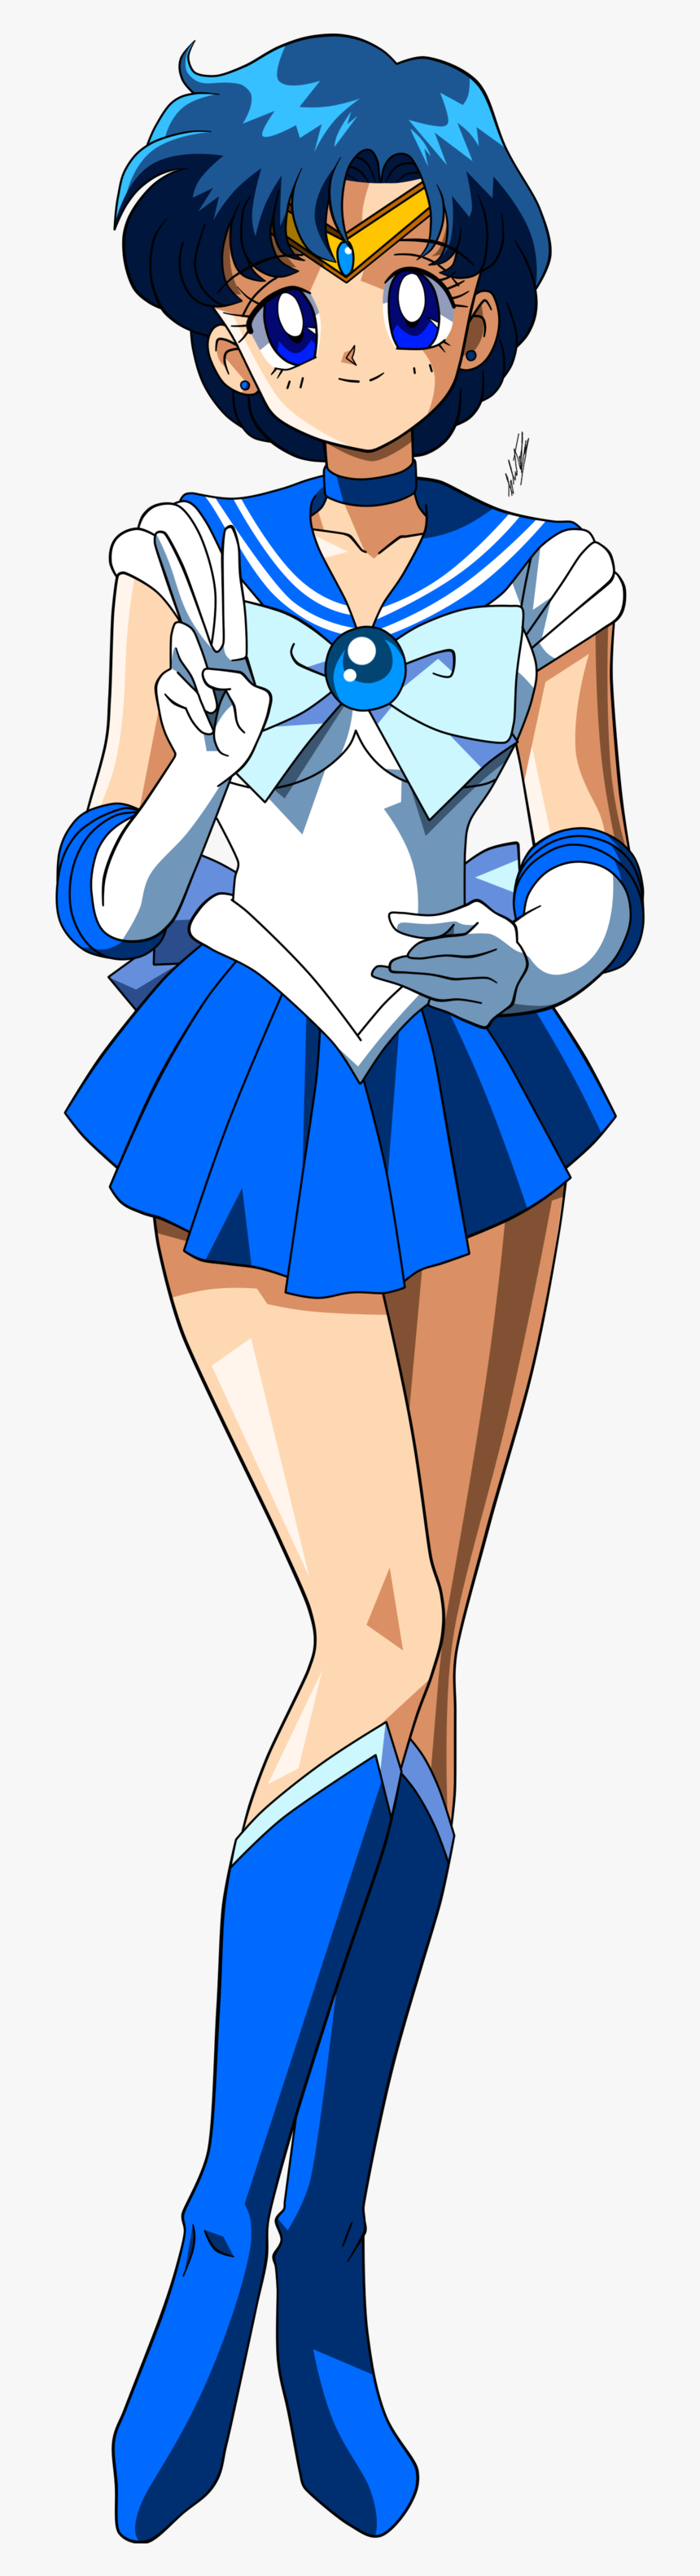 Thumb Image - Mercury Sailor Moon Characters, HD Png Download, Free Download